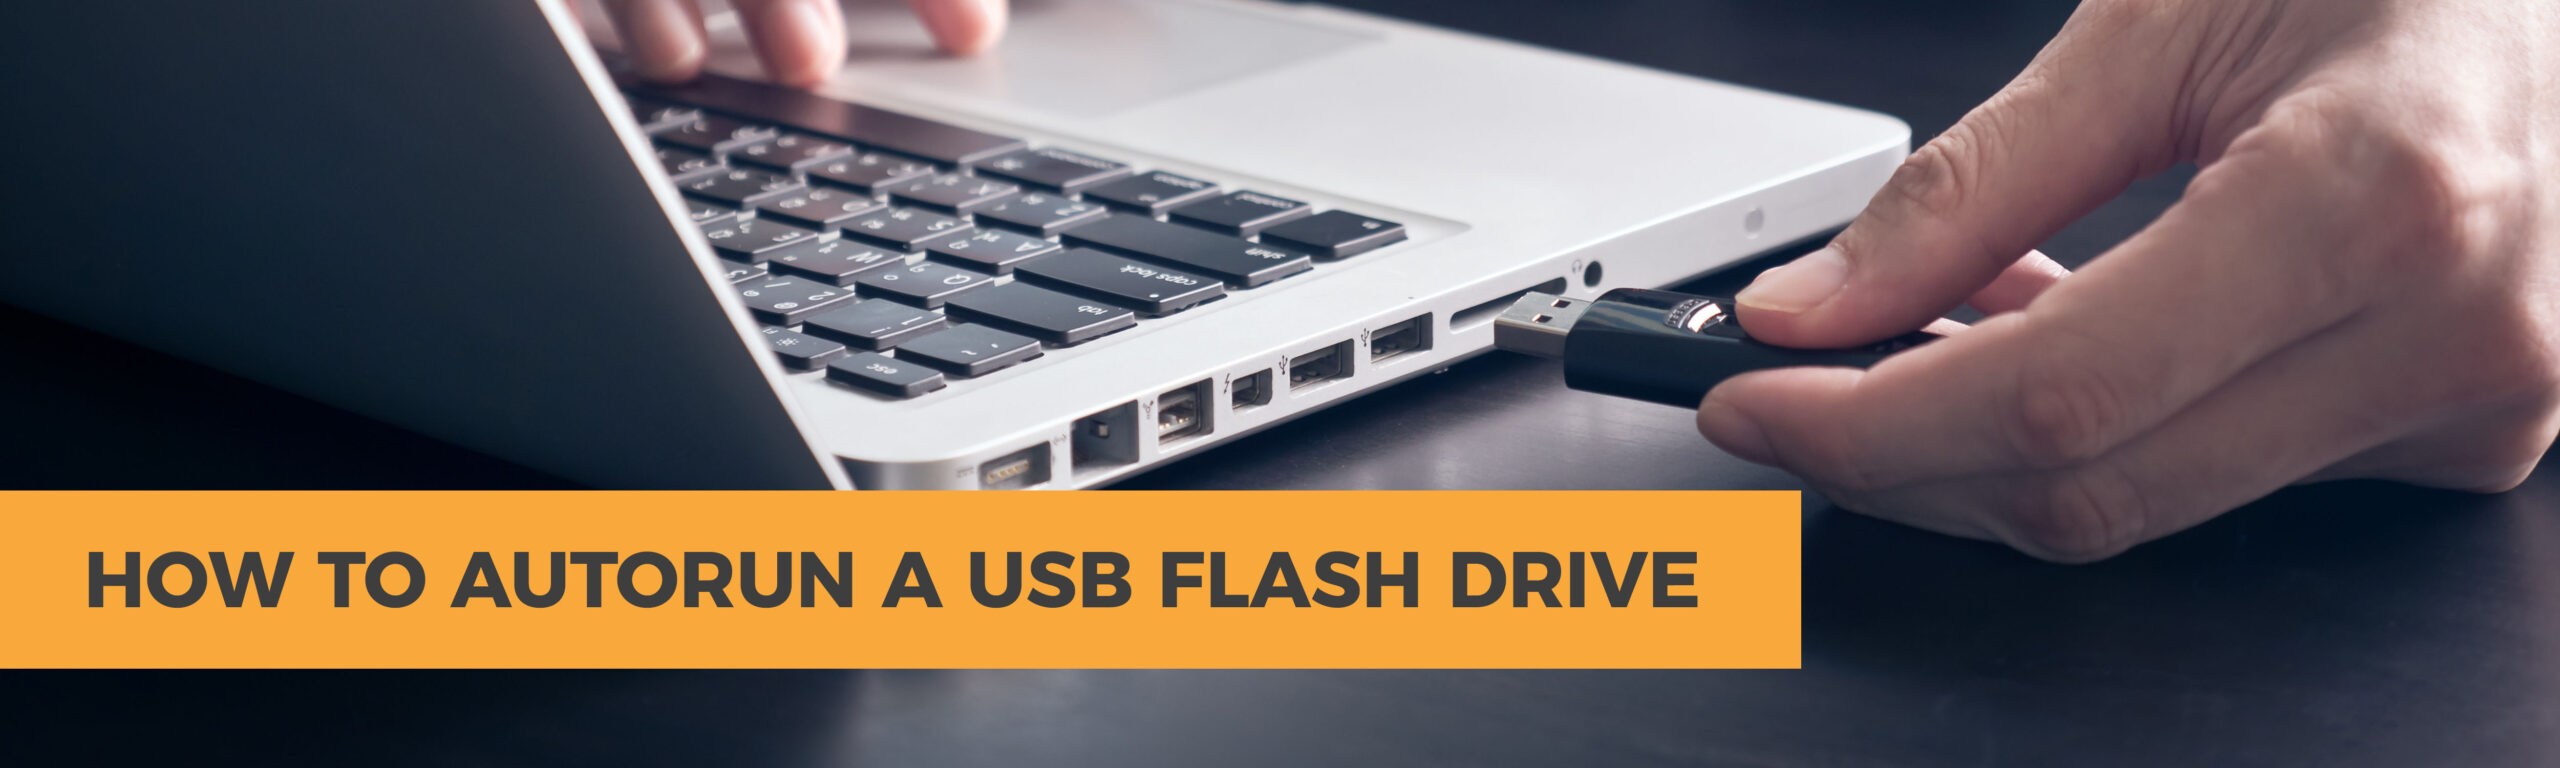 How to Autorun a USB Flash Drive